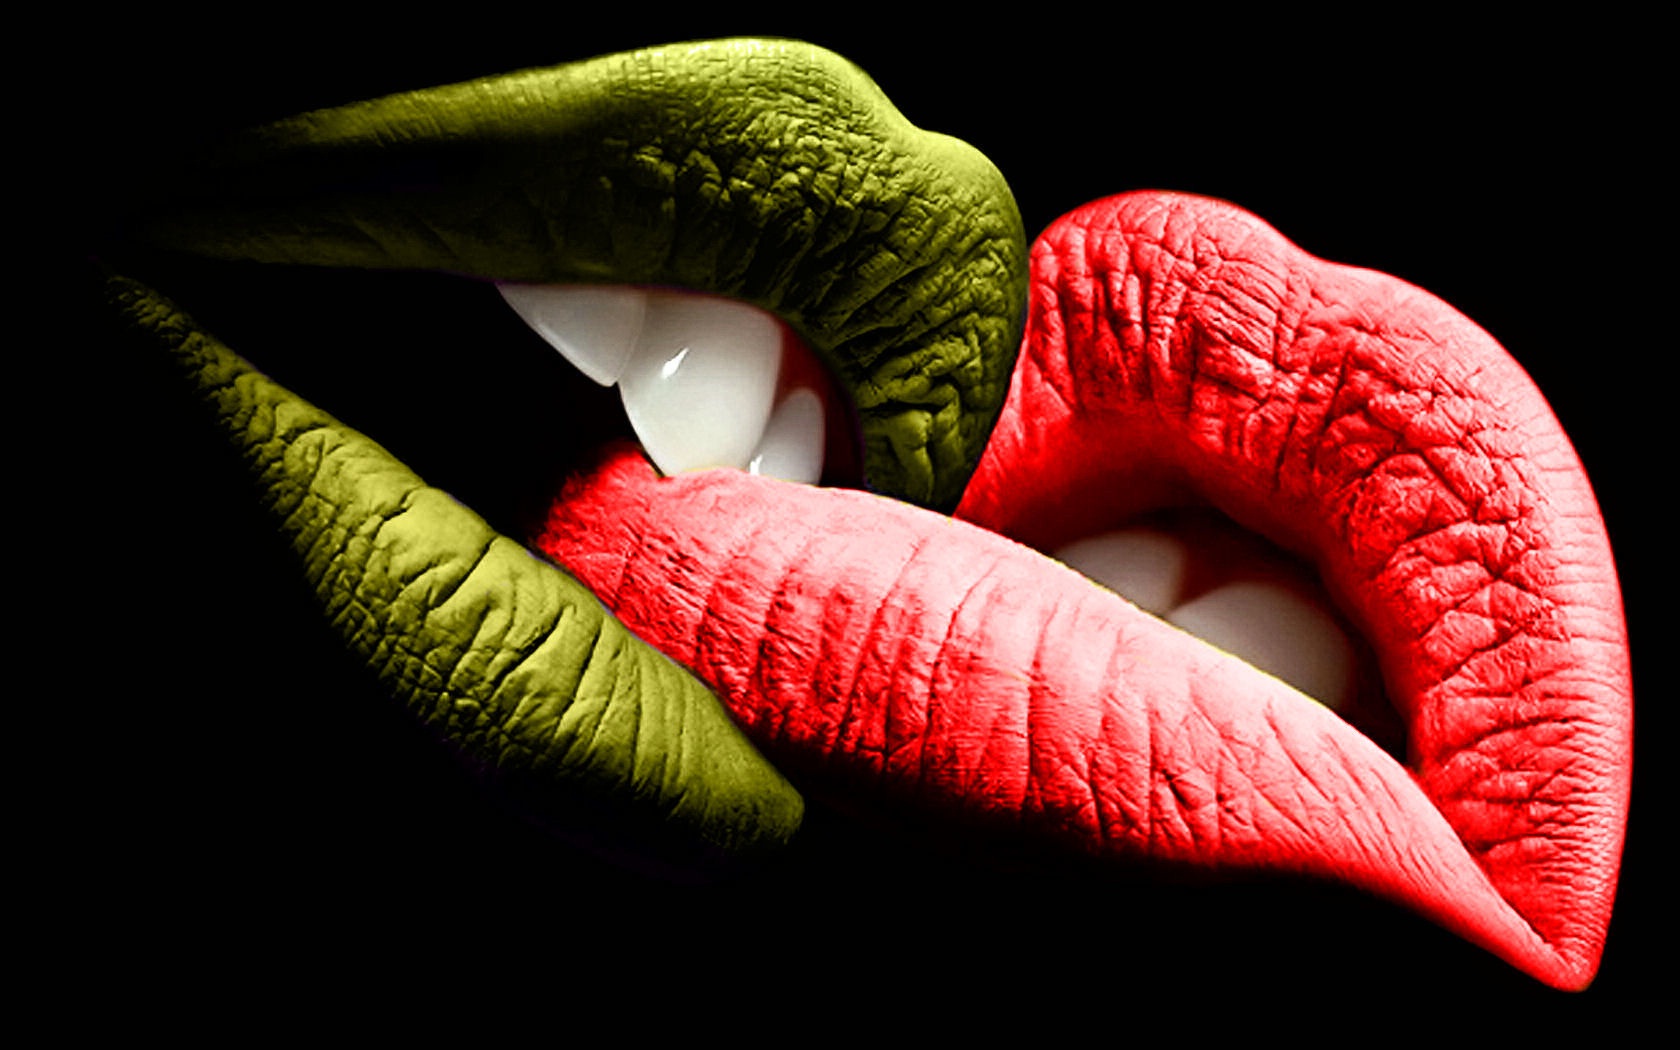 lip kiss wallpaper download,lip,red,mouth,close up,organism